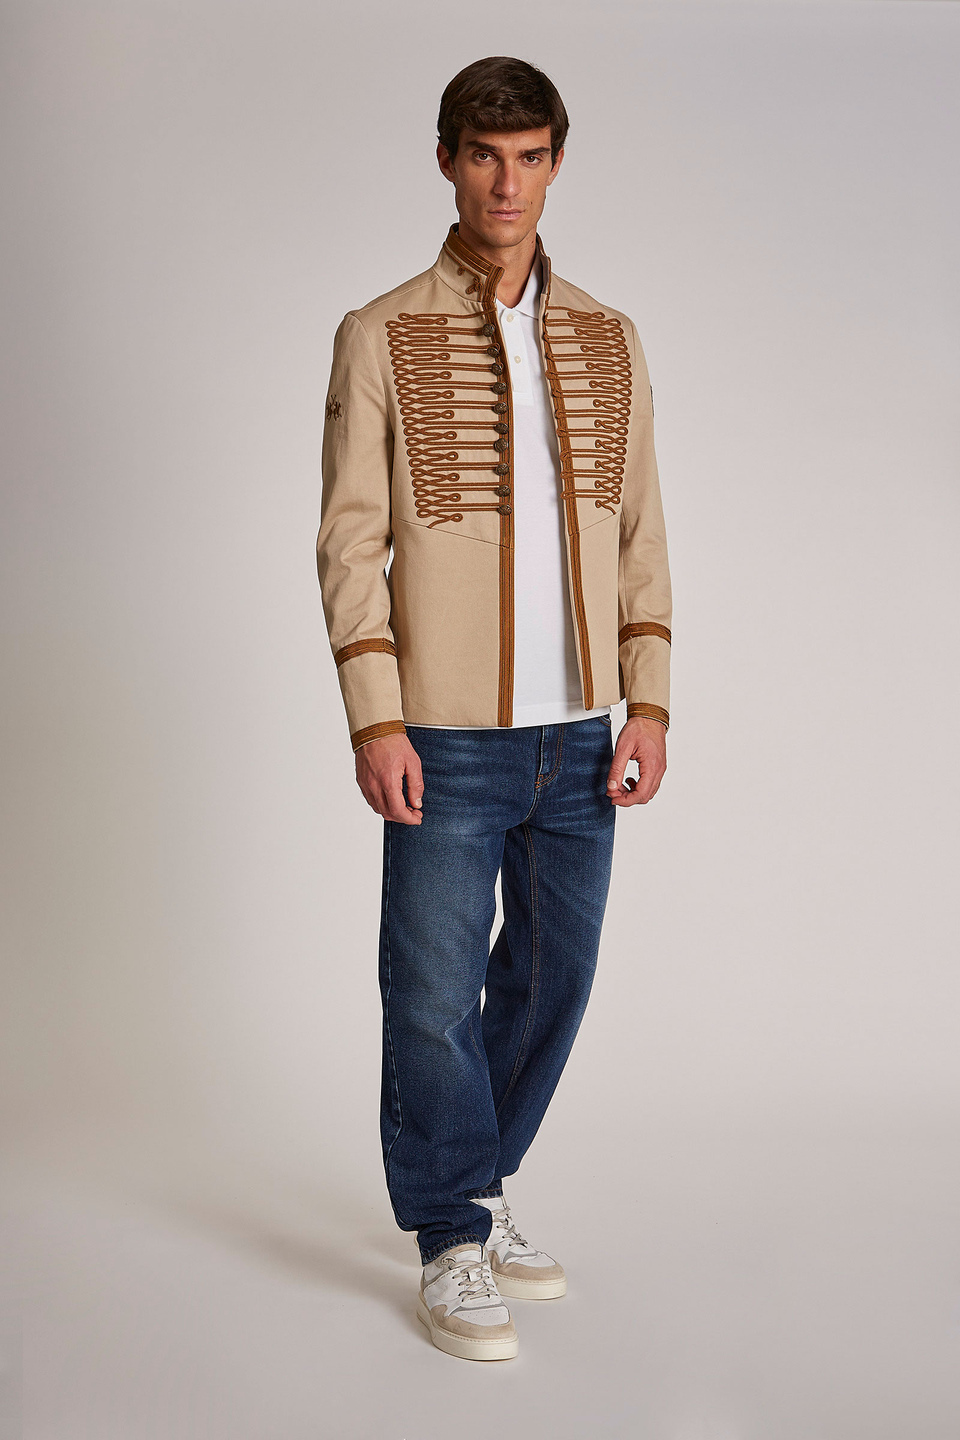 Chaqueta de hombre de algodón, modelo Royal British, corte regular - La Martina - Official Online Shop